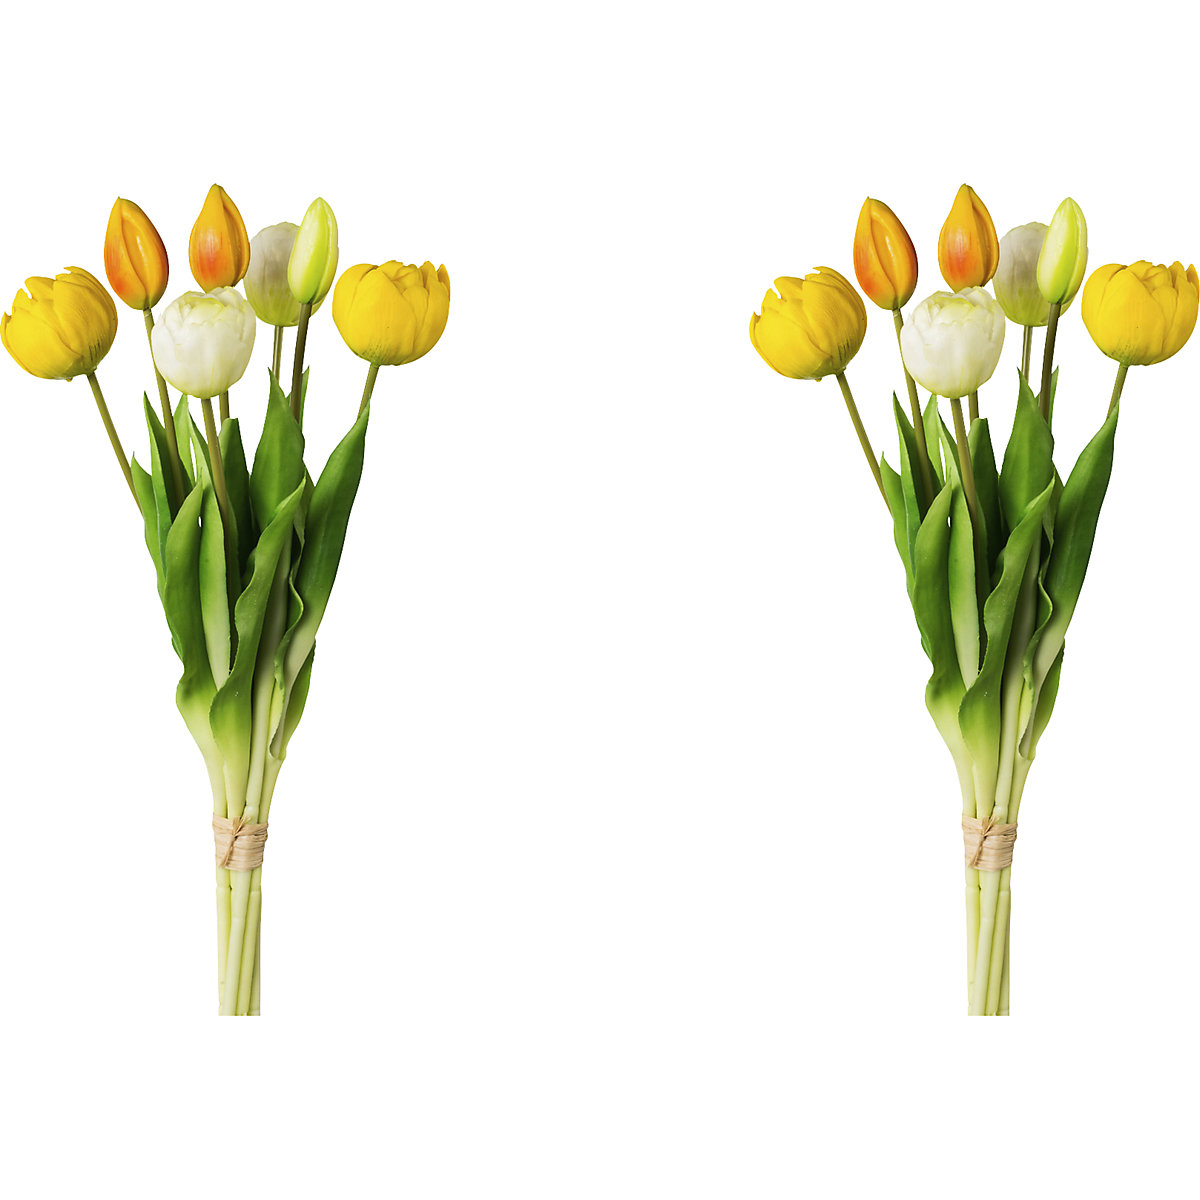 Tulipanes rellenos, real touch, manojo de 7